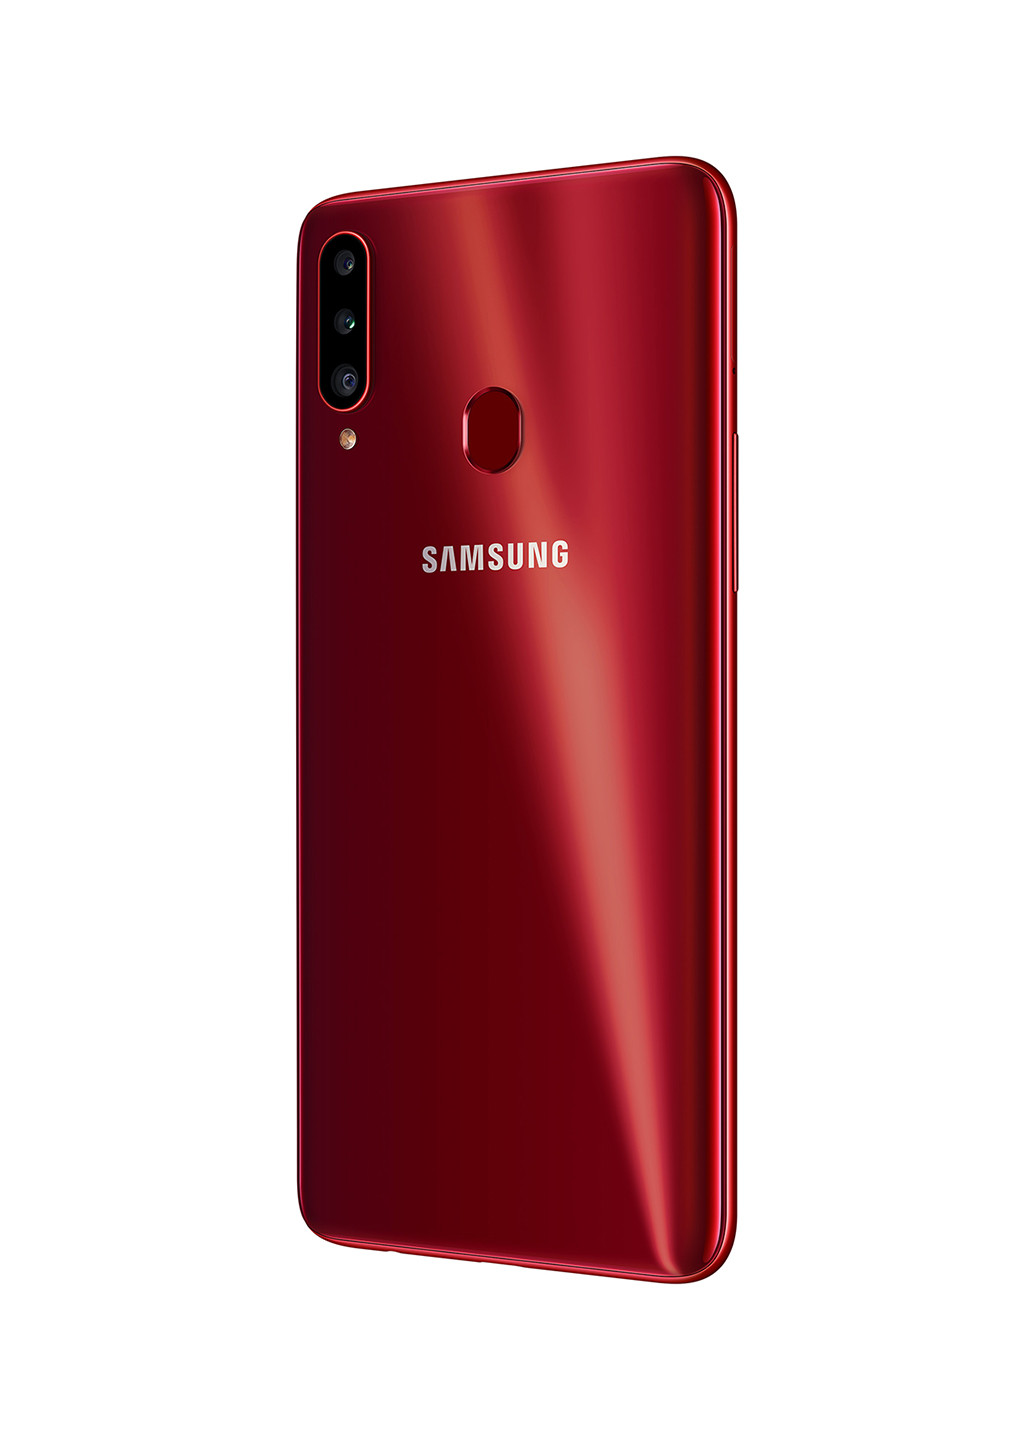 Смартфон Samsung Galaxy A20s 3/32Gb Red красный